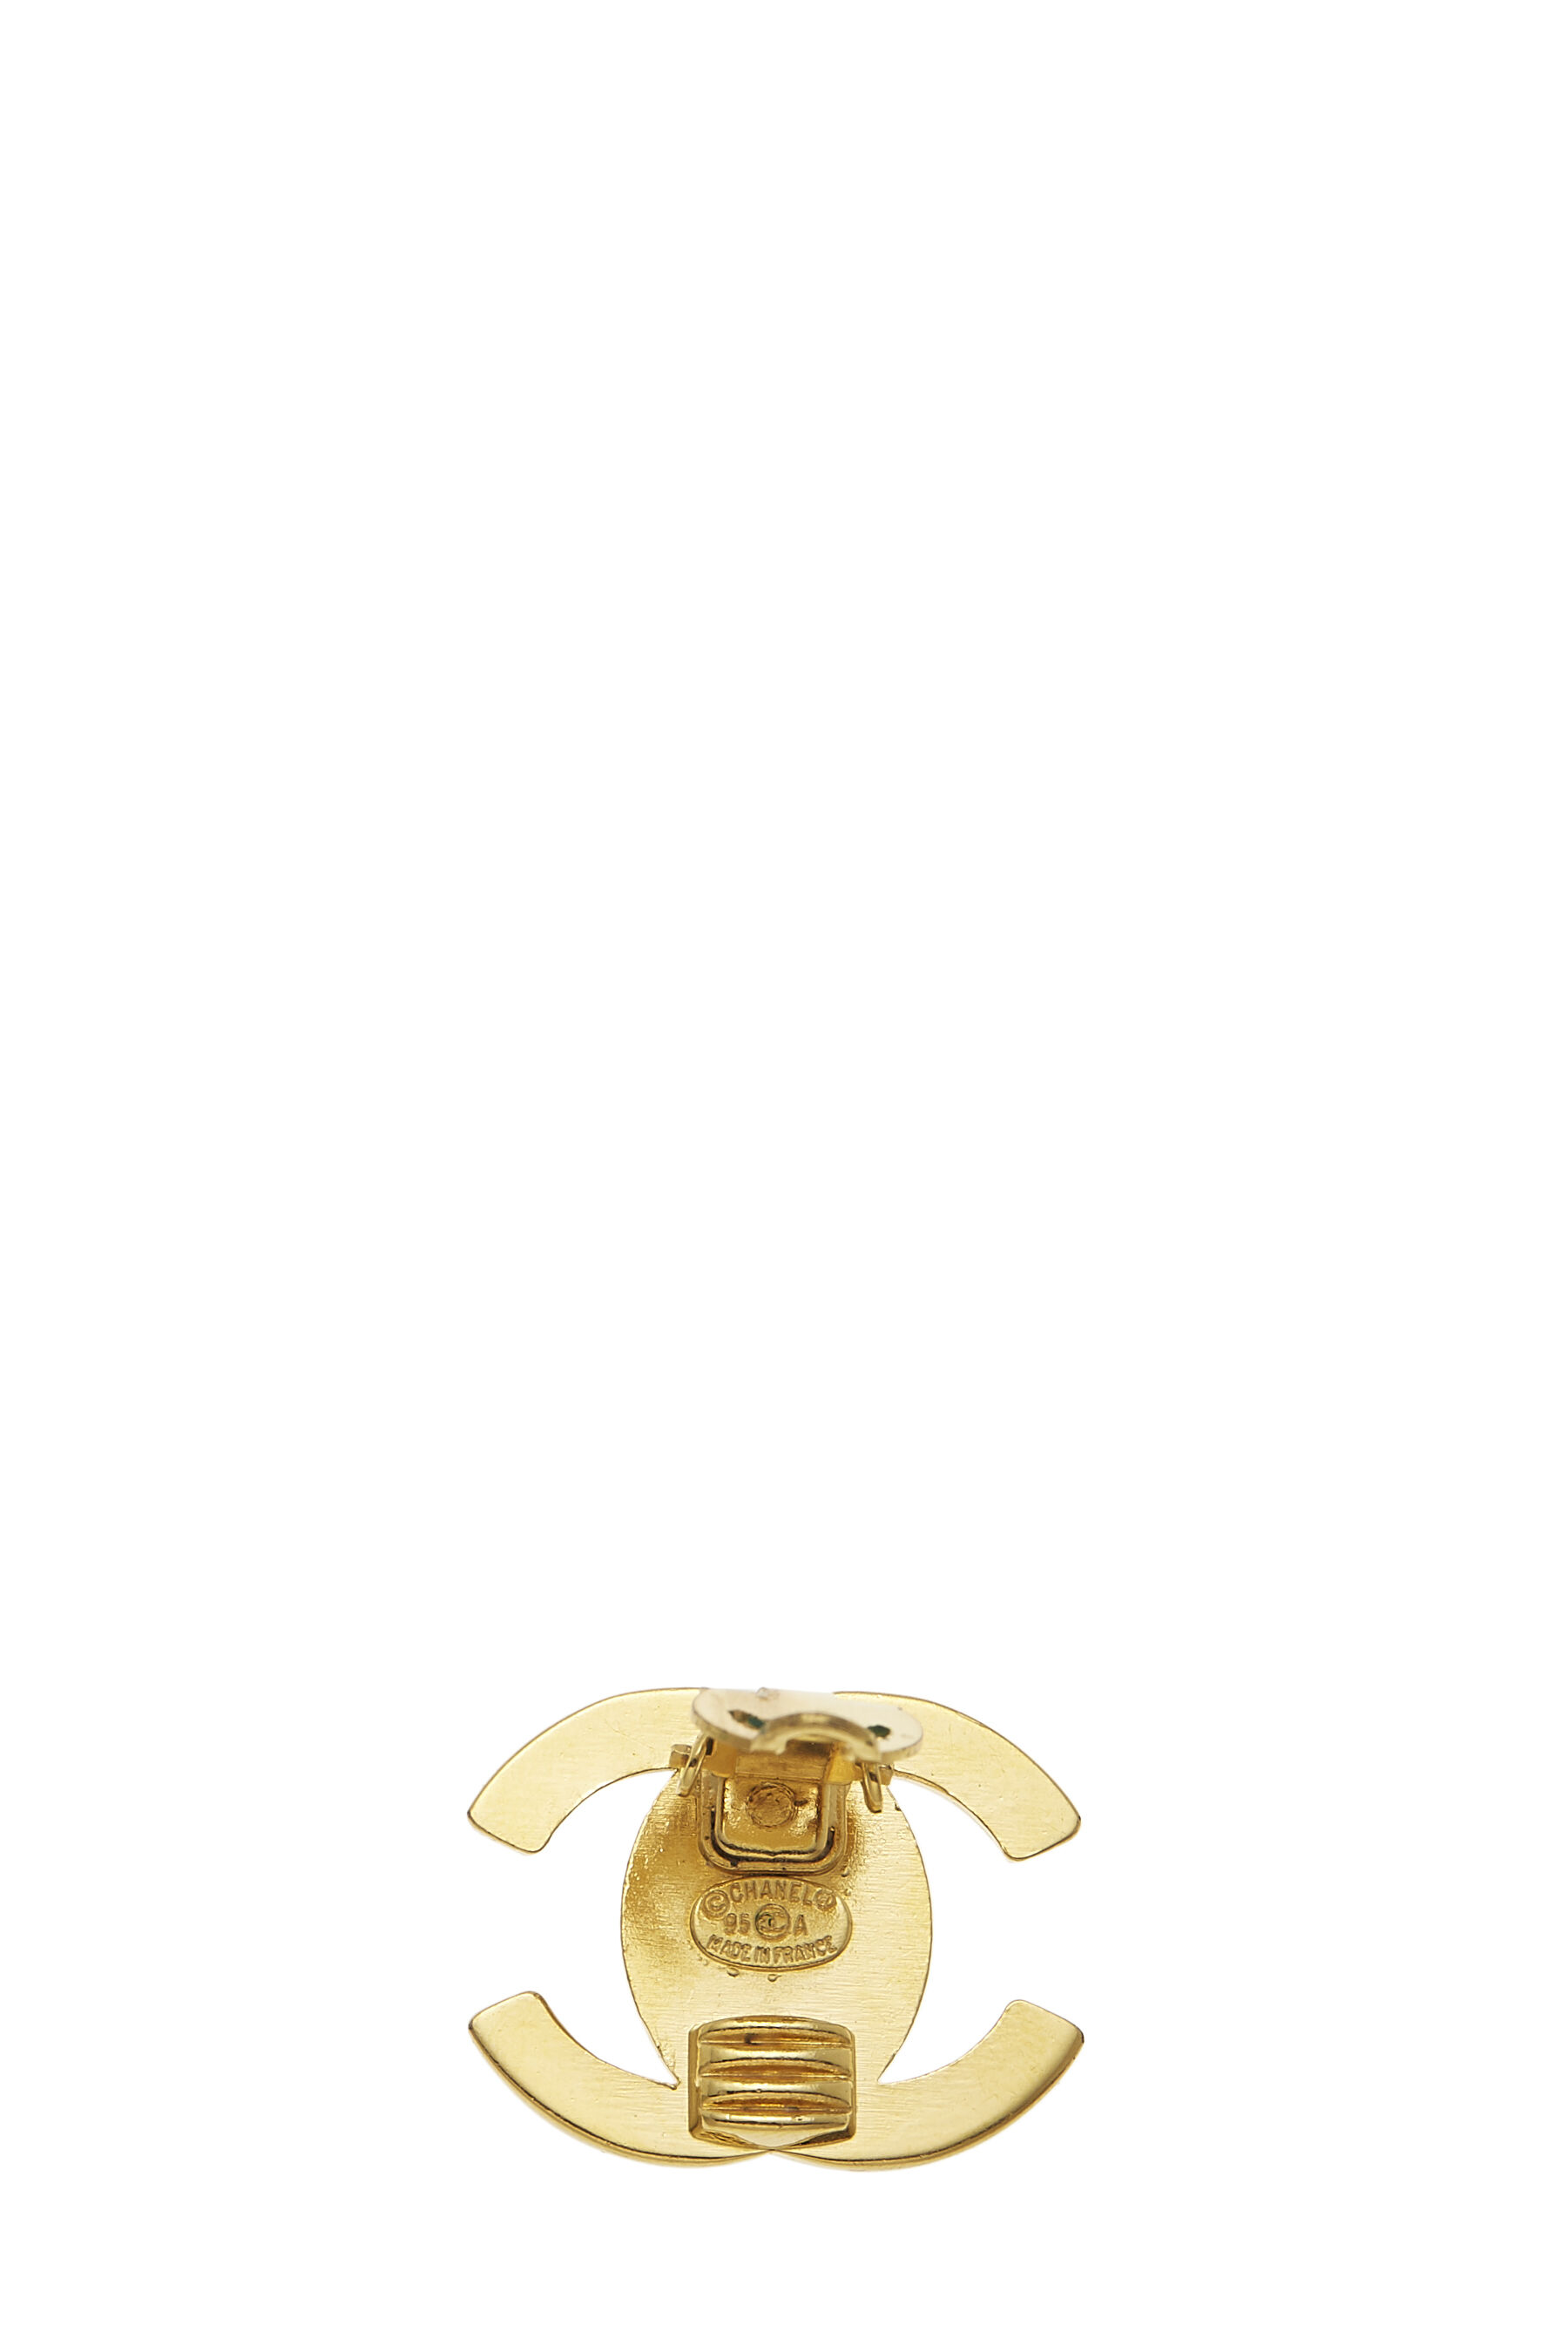 Chanel Gold 'CC' Turnlock Pin Large Q6J0NM17D5048